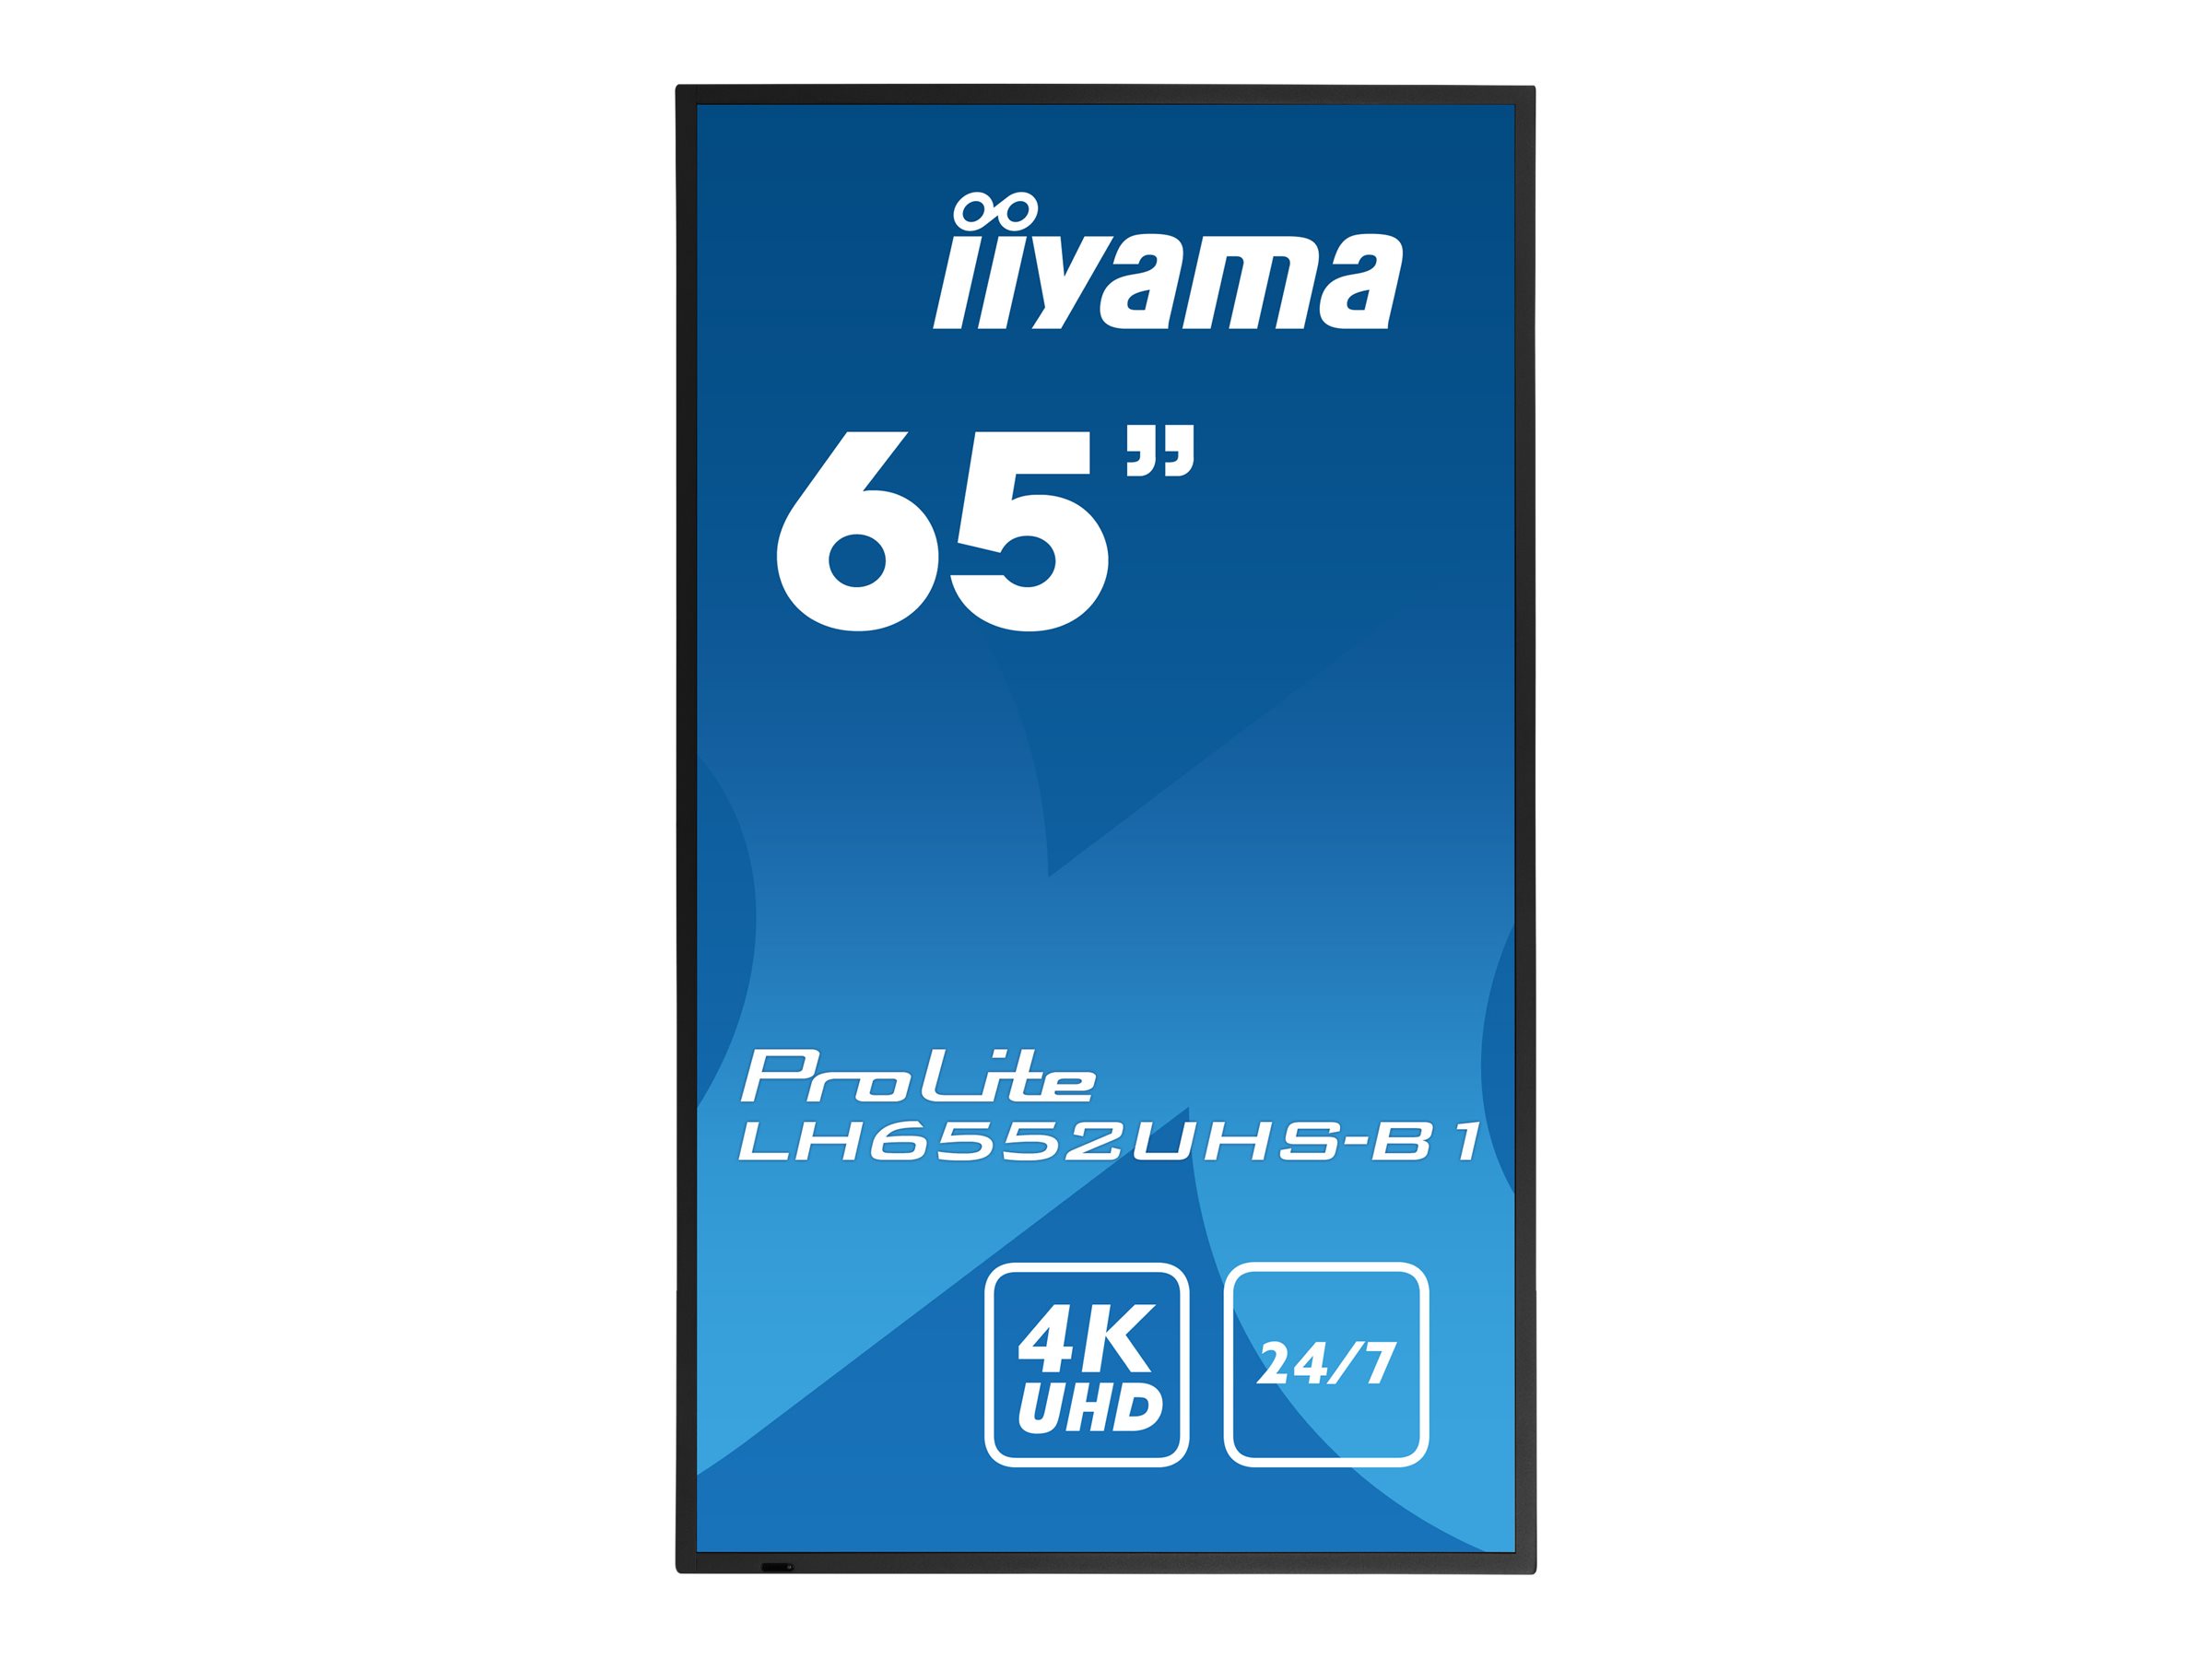 iiyama ProLite LH6552UHS-B1 - 165 cm (65